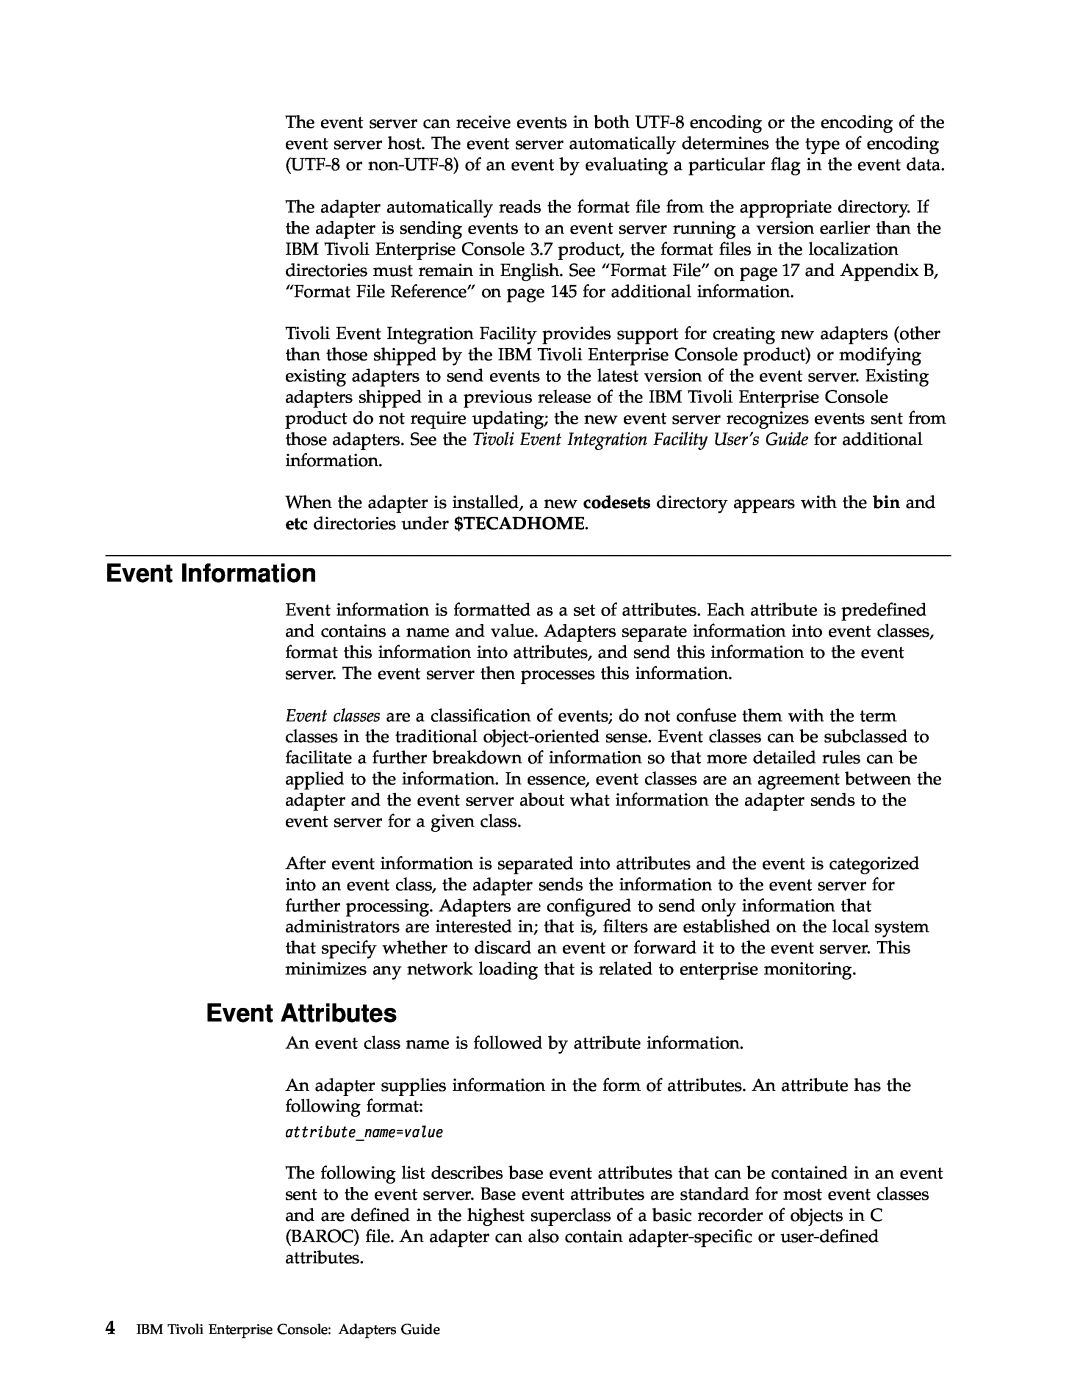 IBM Enterprise Console manual Event Information, Event Attributes 